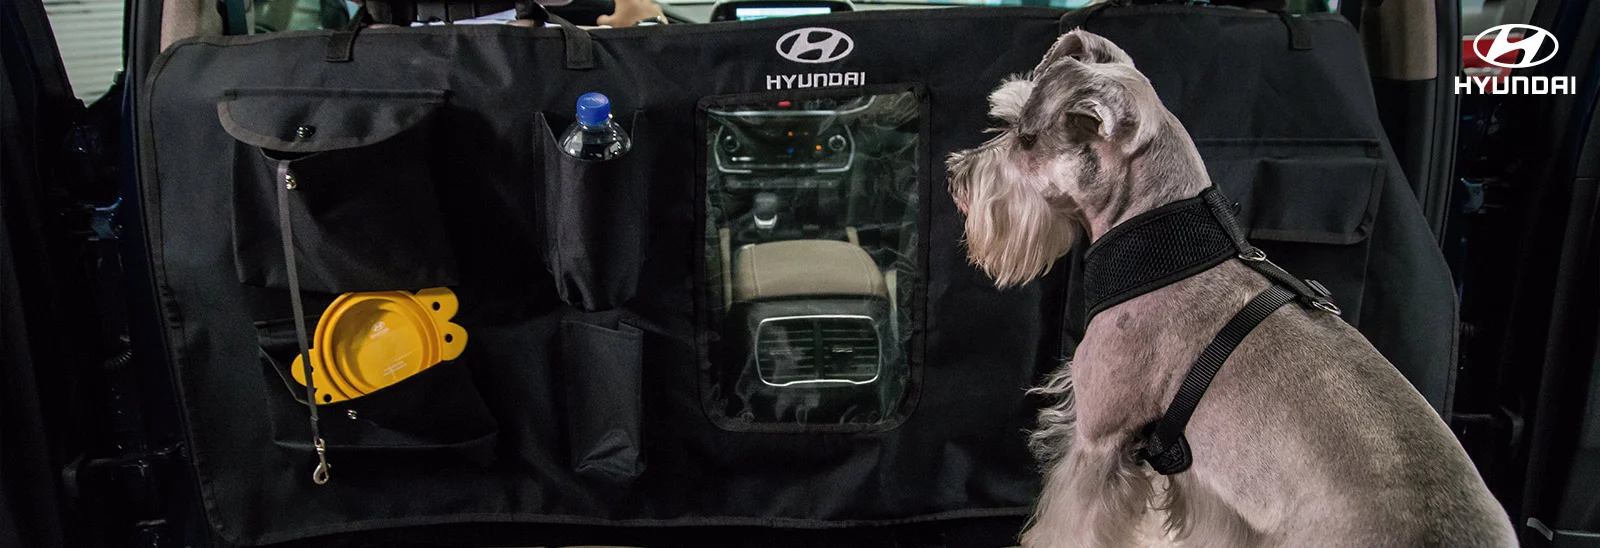 Hyundai Motors, Viajar con Mascota, Accesorios para Mascotas, Reglamento Transito